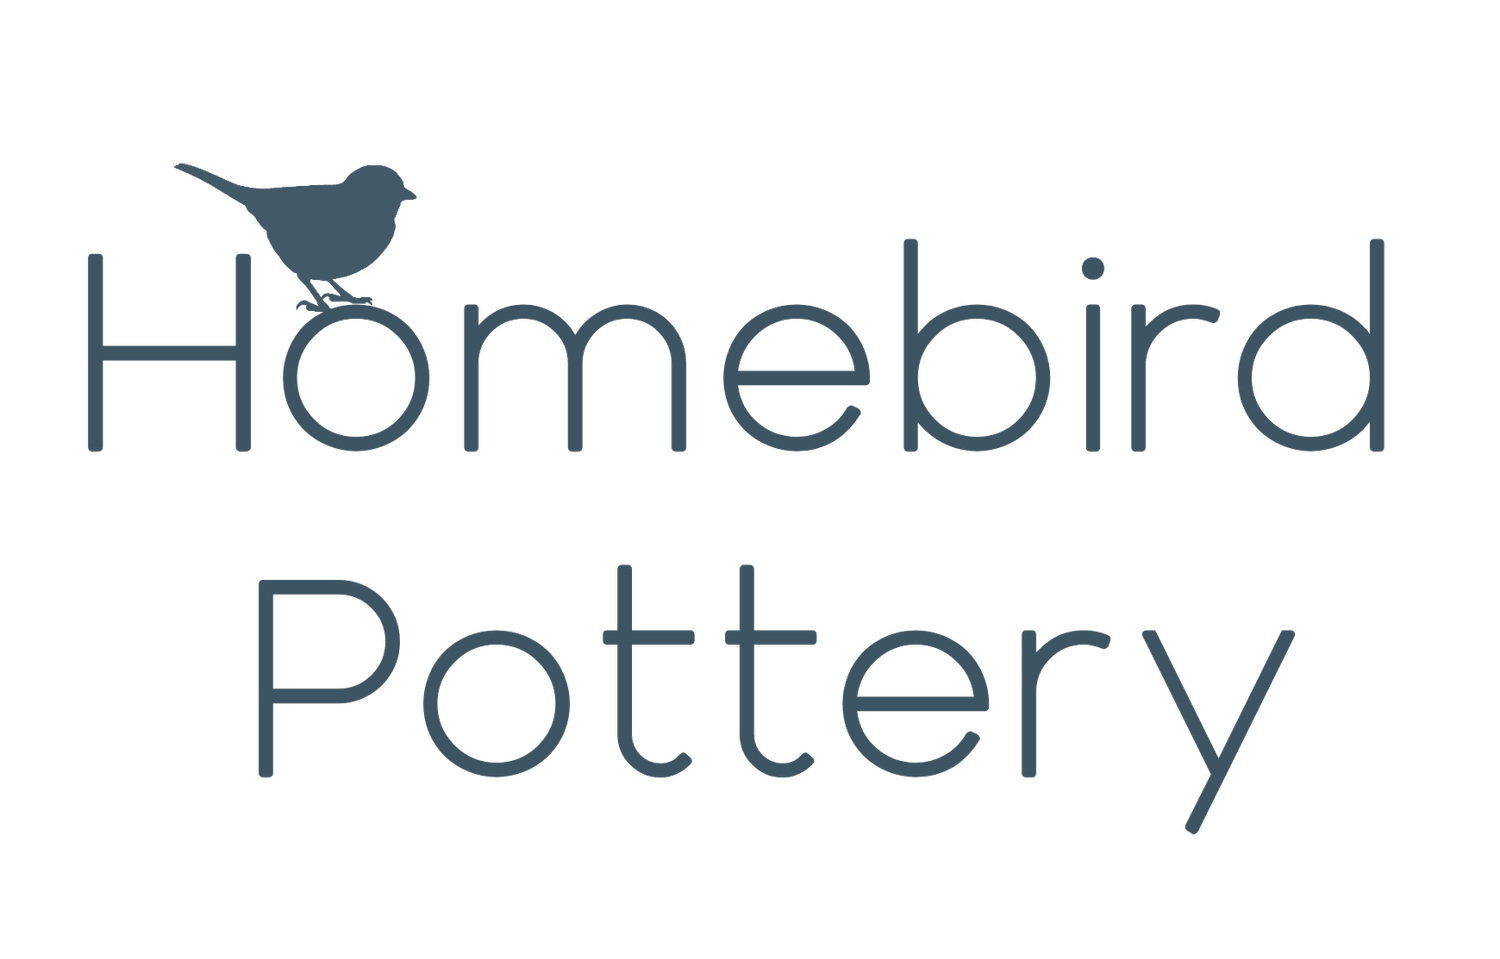 Homebird Pottery